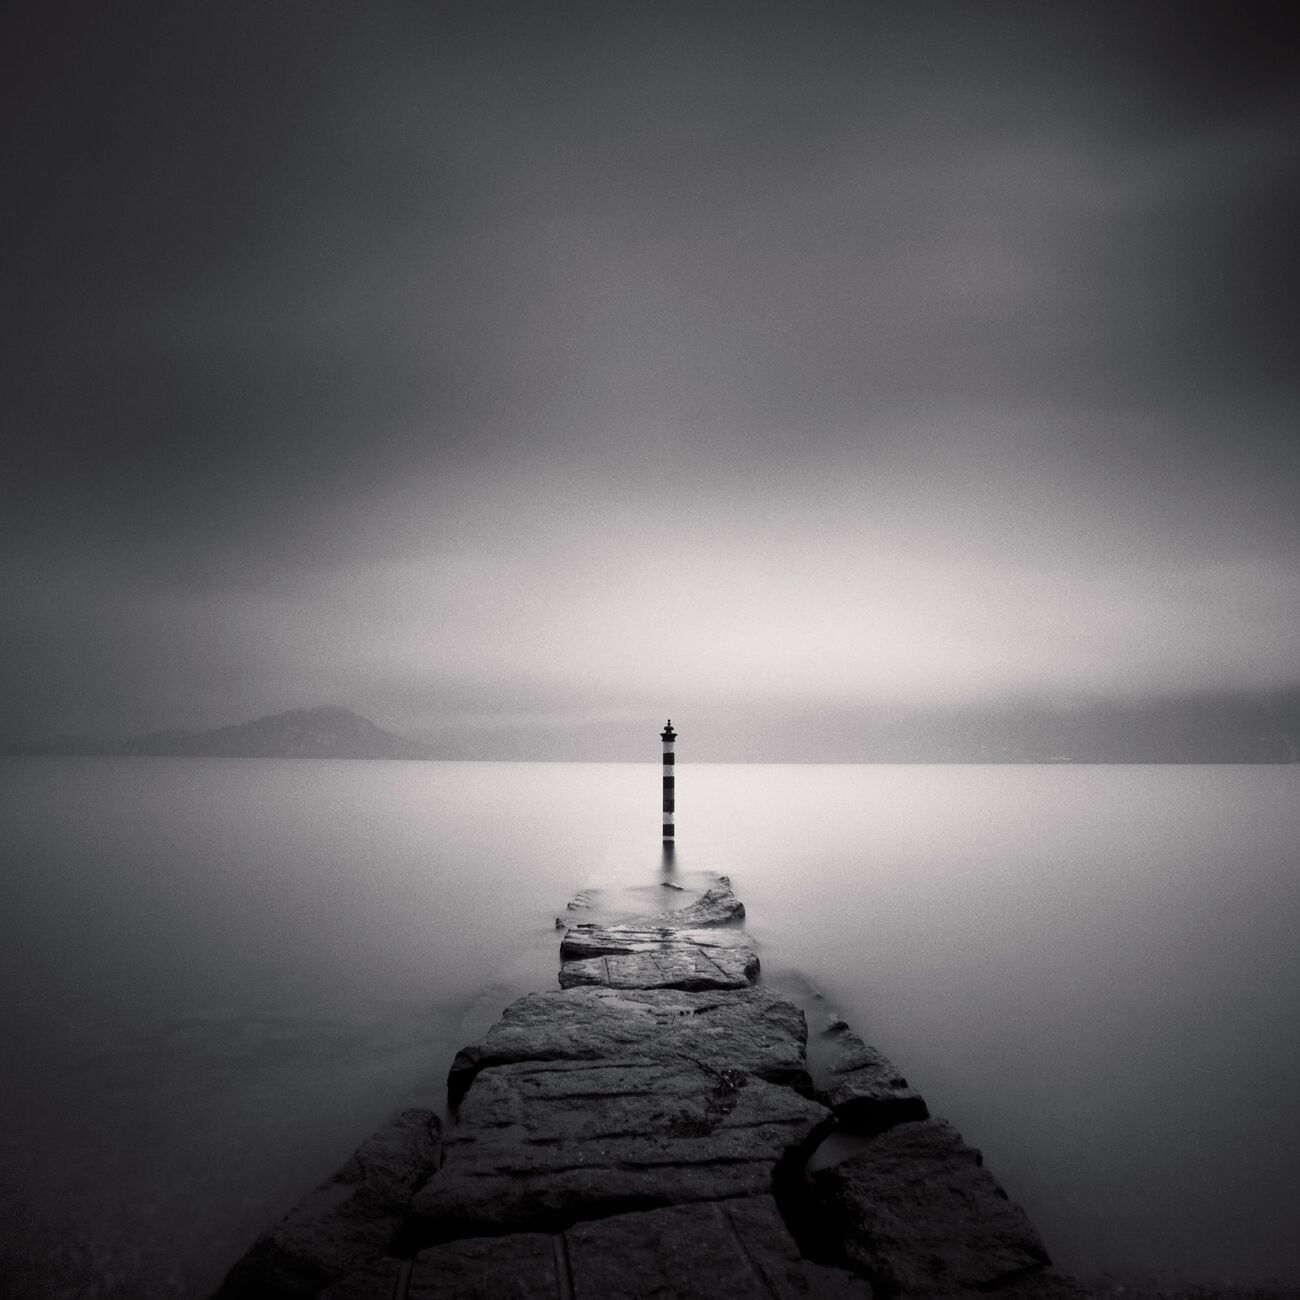 Striped Pole, Etude 1, Lake Maggiore, Switzerland. August 2014. Ref-11441 - Denis Olivier Photography